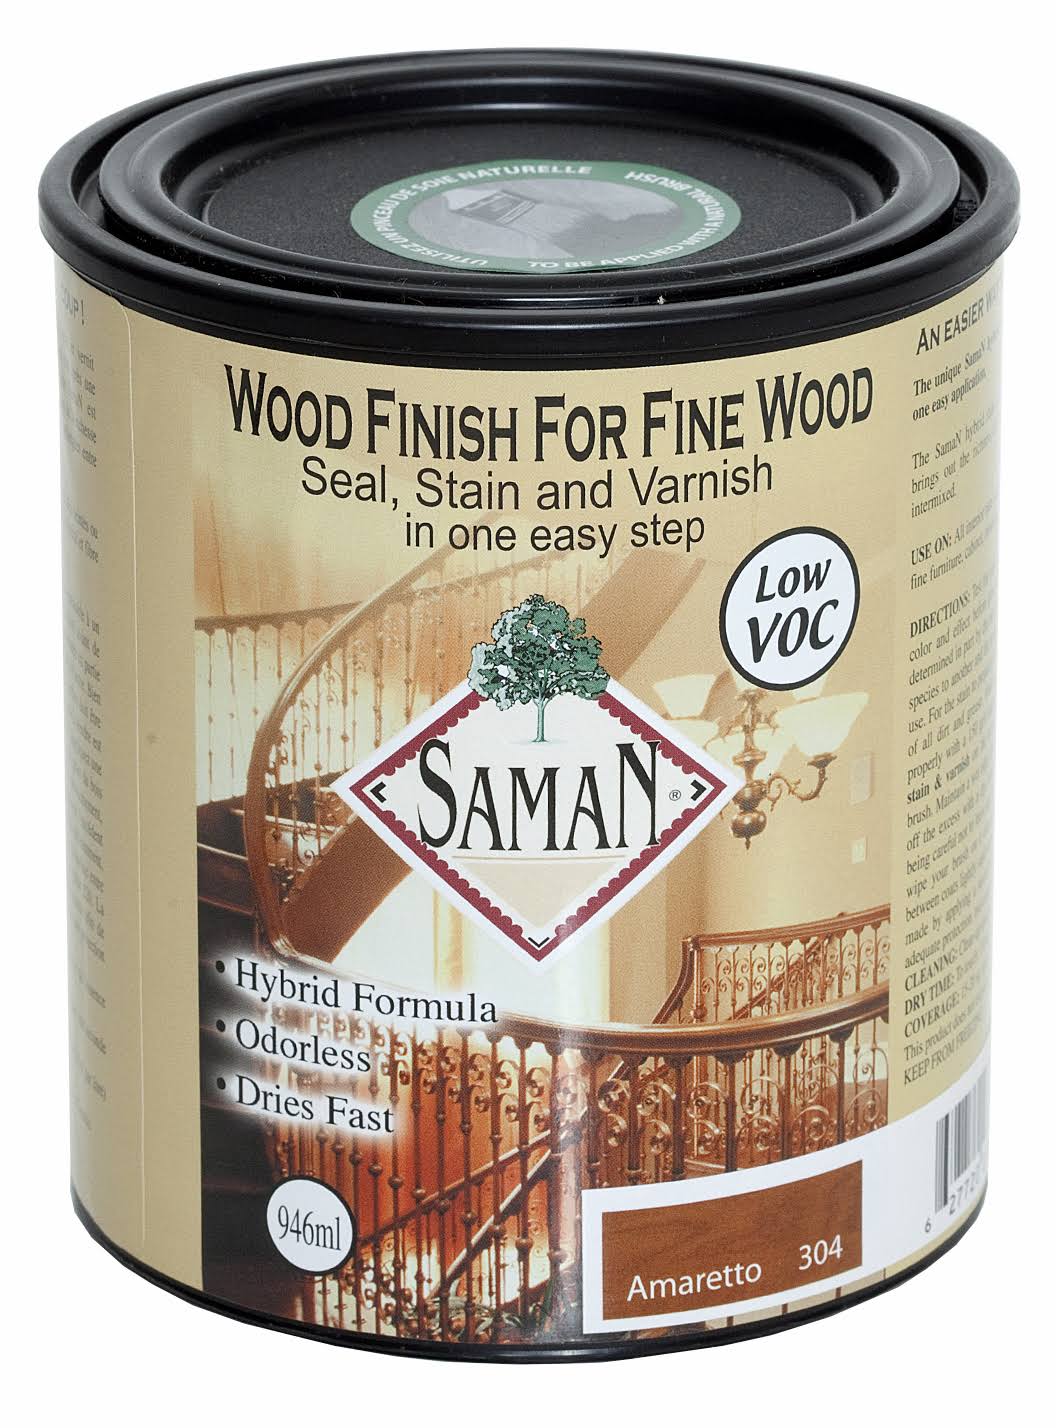 Saman Products SAM-304-1L Amaretto Wood Finish Seal, Stain & Varnish